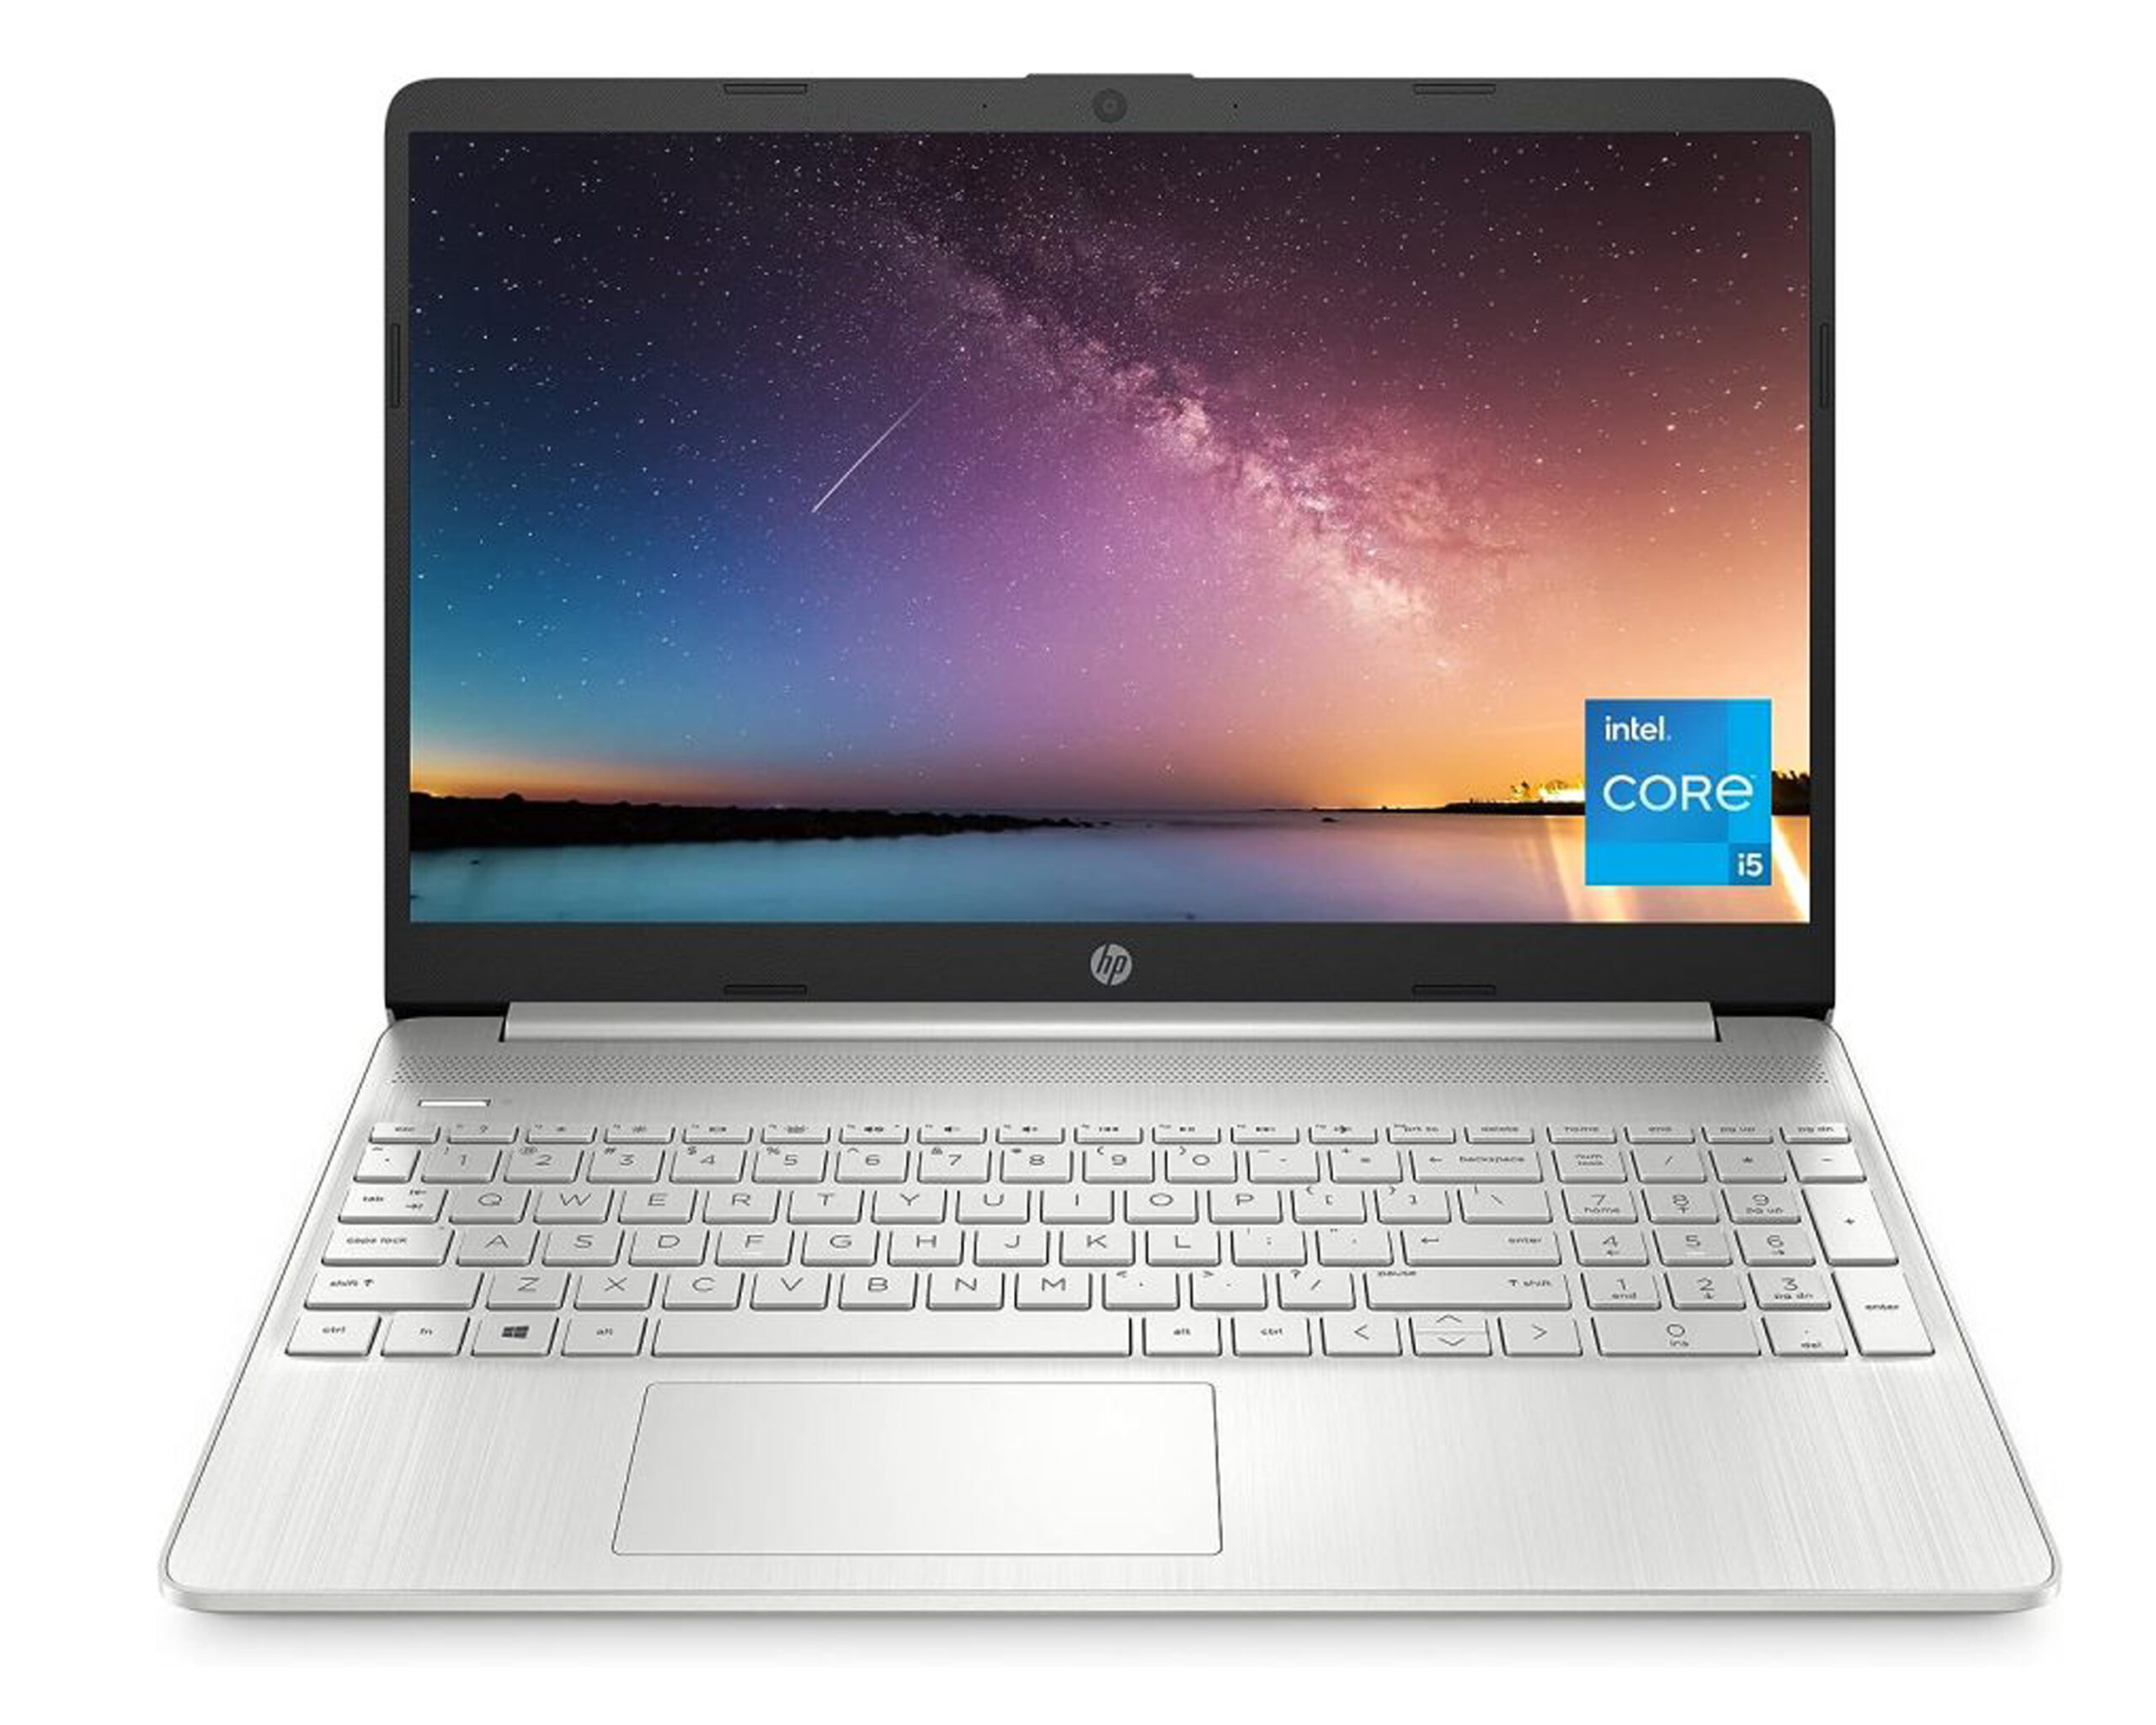 best laptops for graphic design